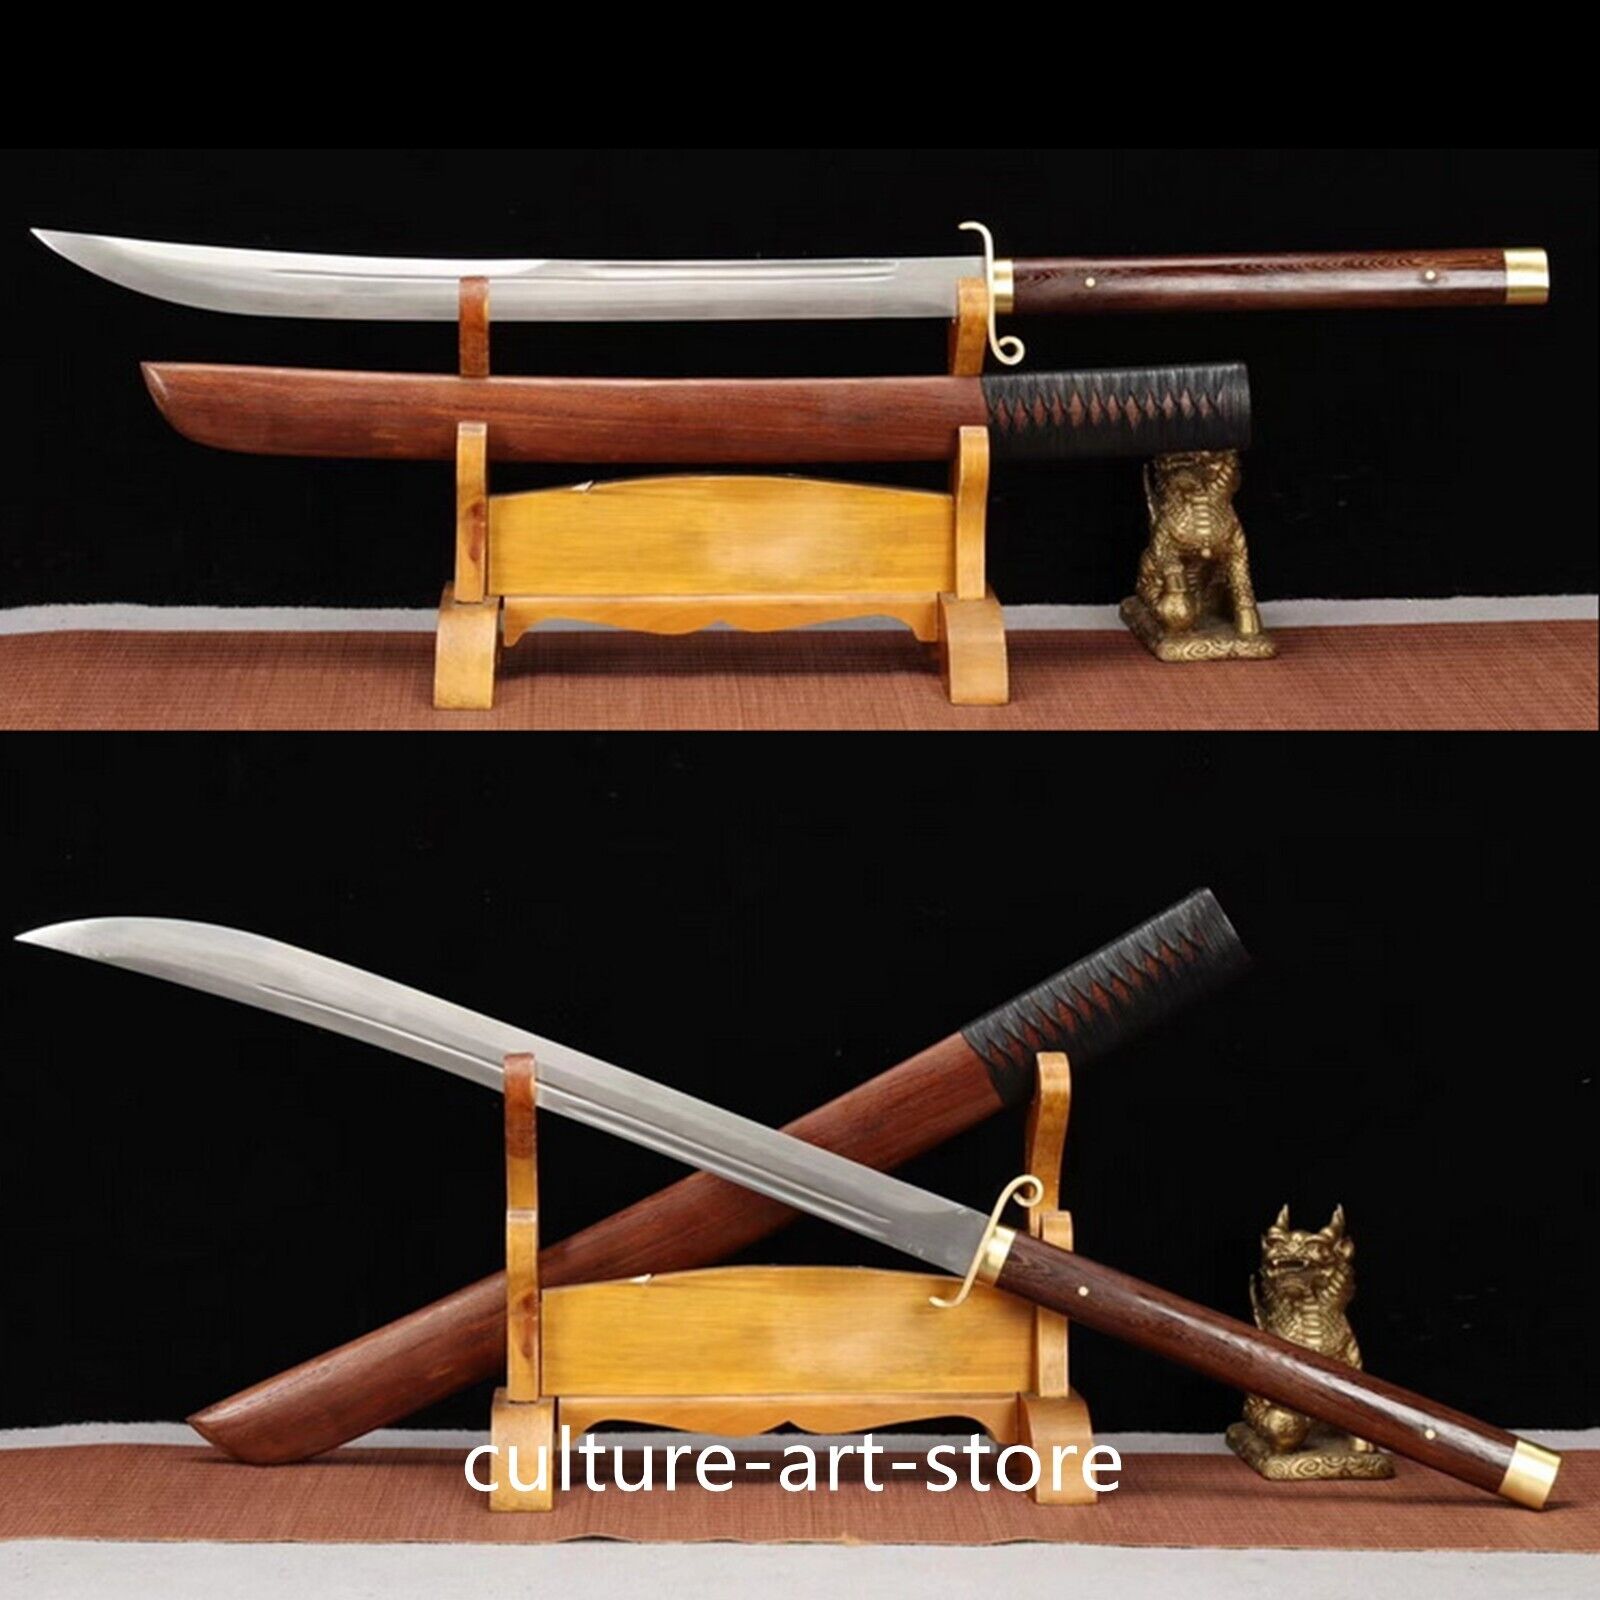 43“ Battle ready “斩马刀”Japanese Samurai Katana 1095 High carbon Steel Sharp